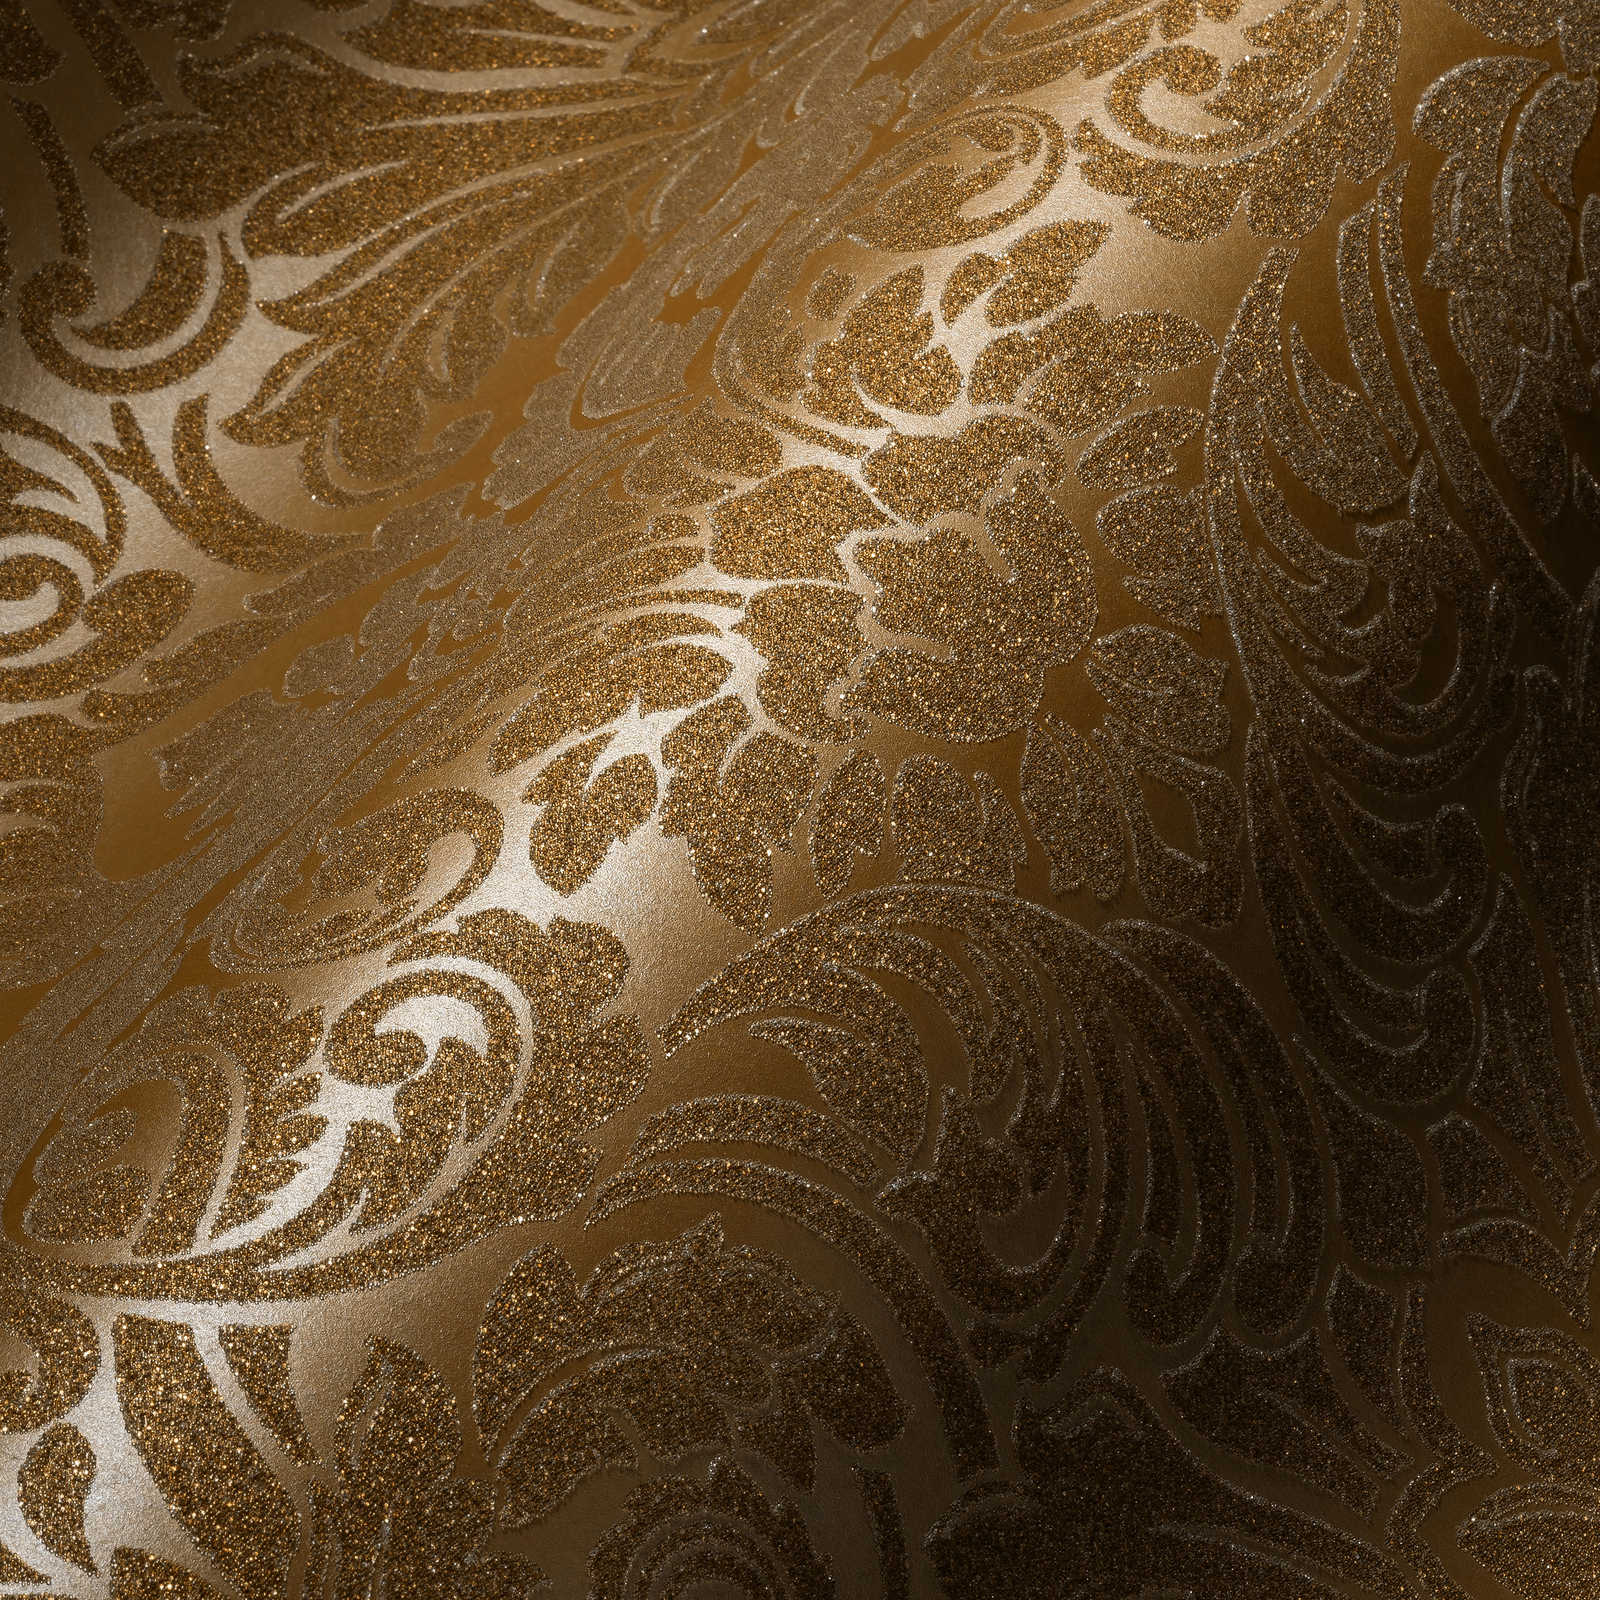             Ornament wallpaper metallic effect & floral design - gold
        